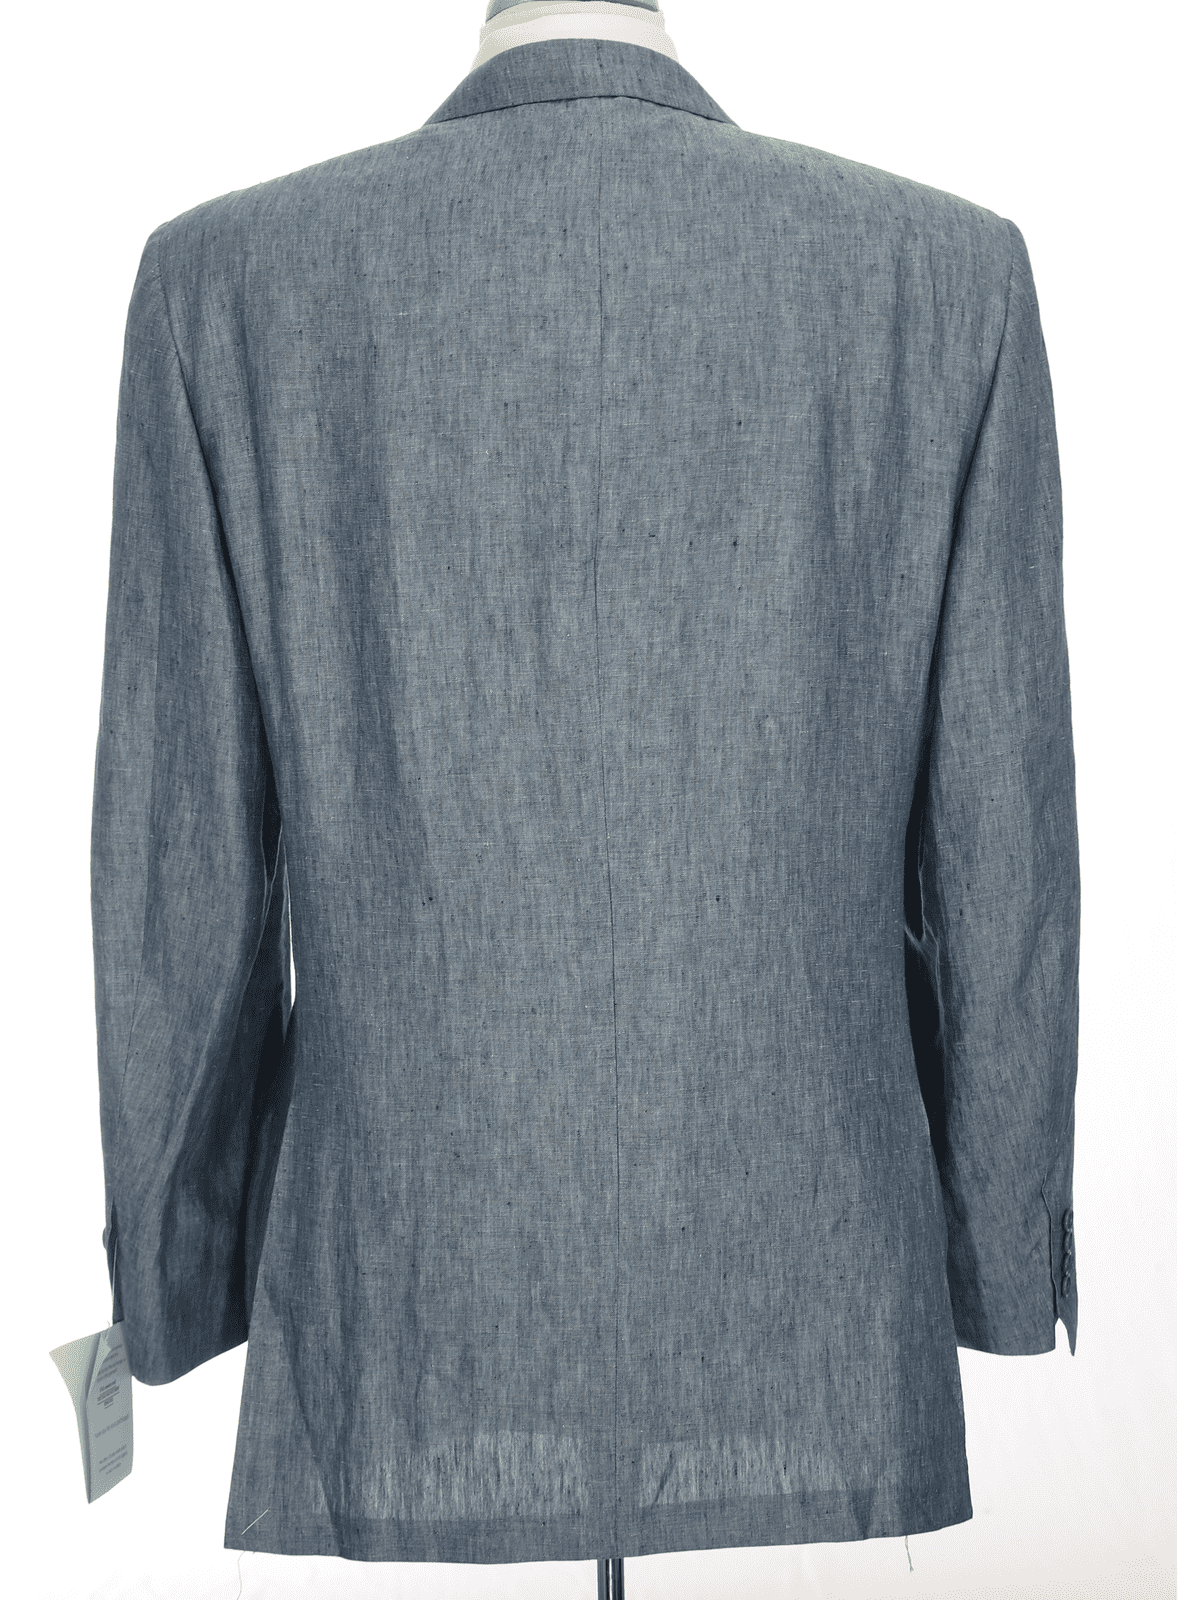 Canali SUITS Canali Mens 46r 58 Drop 6 Classic Fit Blue 2-button Half Lined 100% Linen Suit